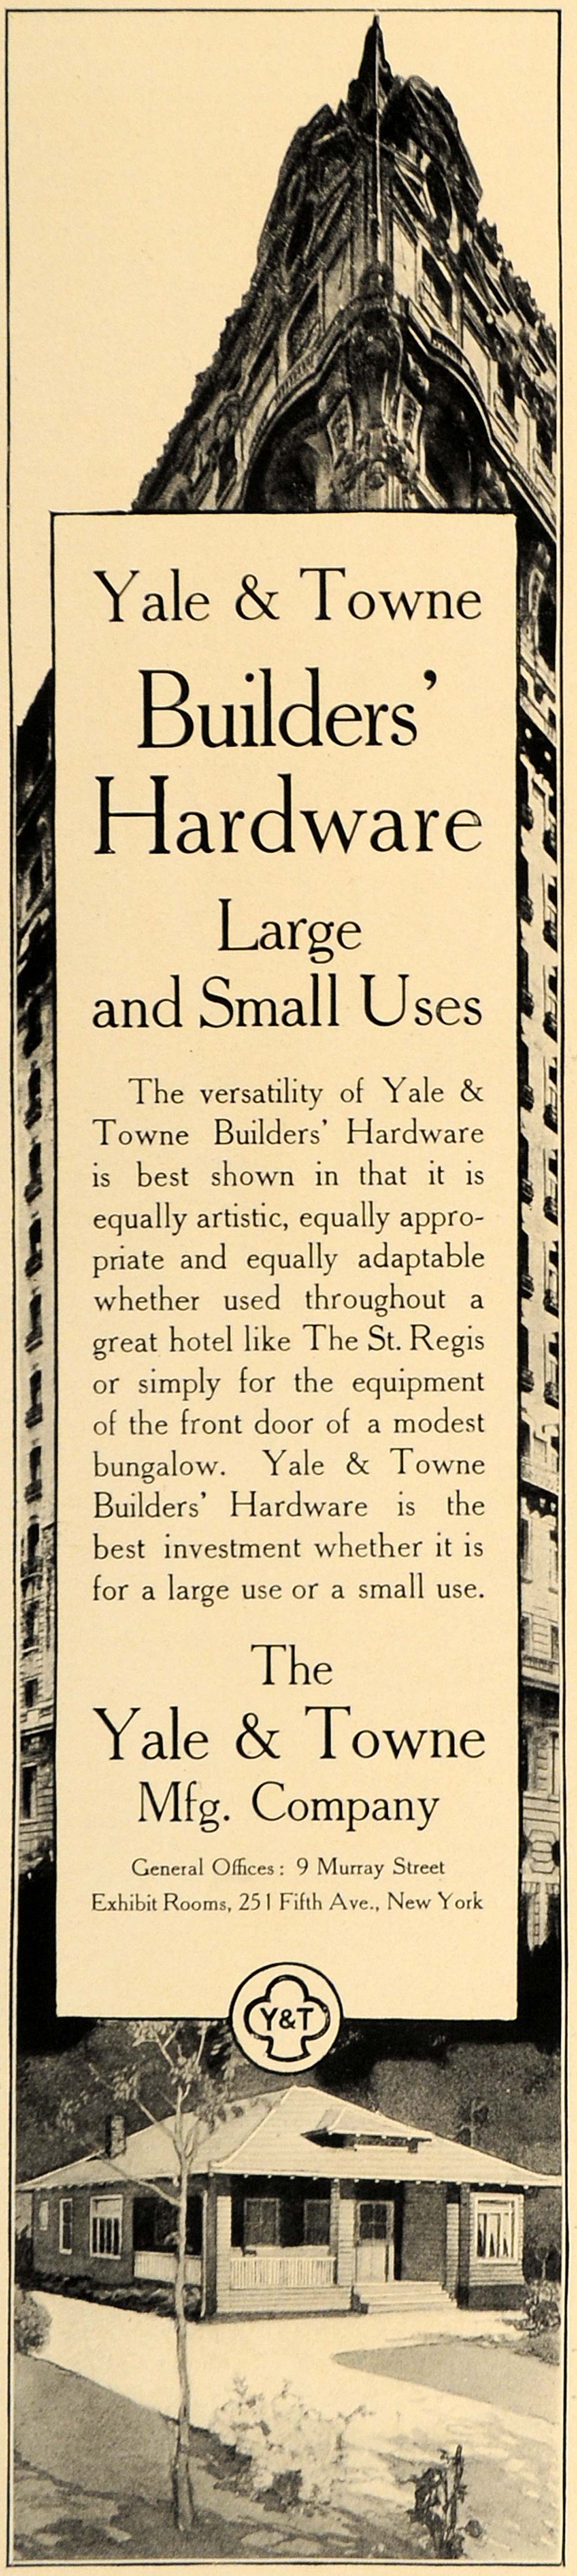 1907 Ad Yale Towne Builders' Hardware New York - ORIGINAL ADVERTISING CL9